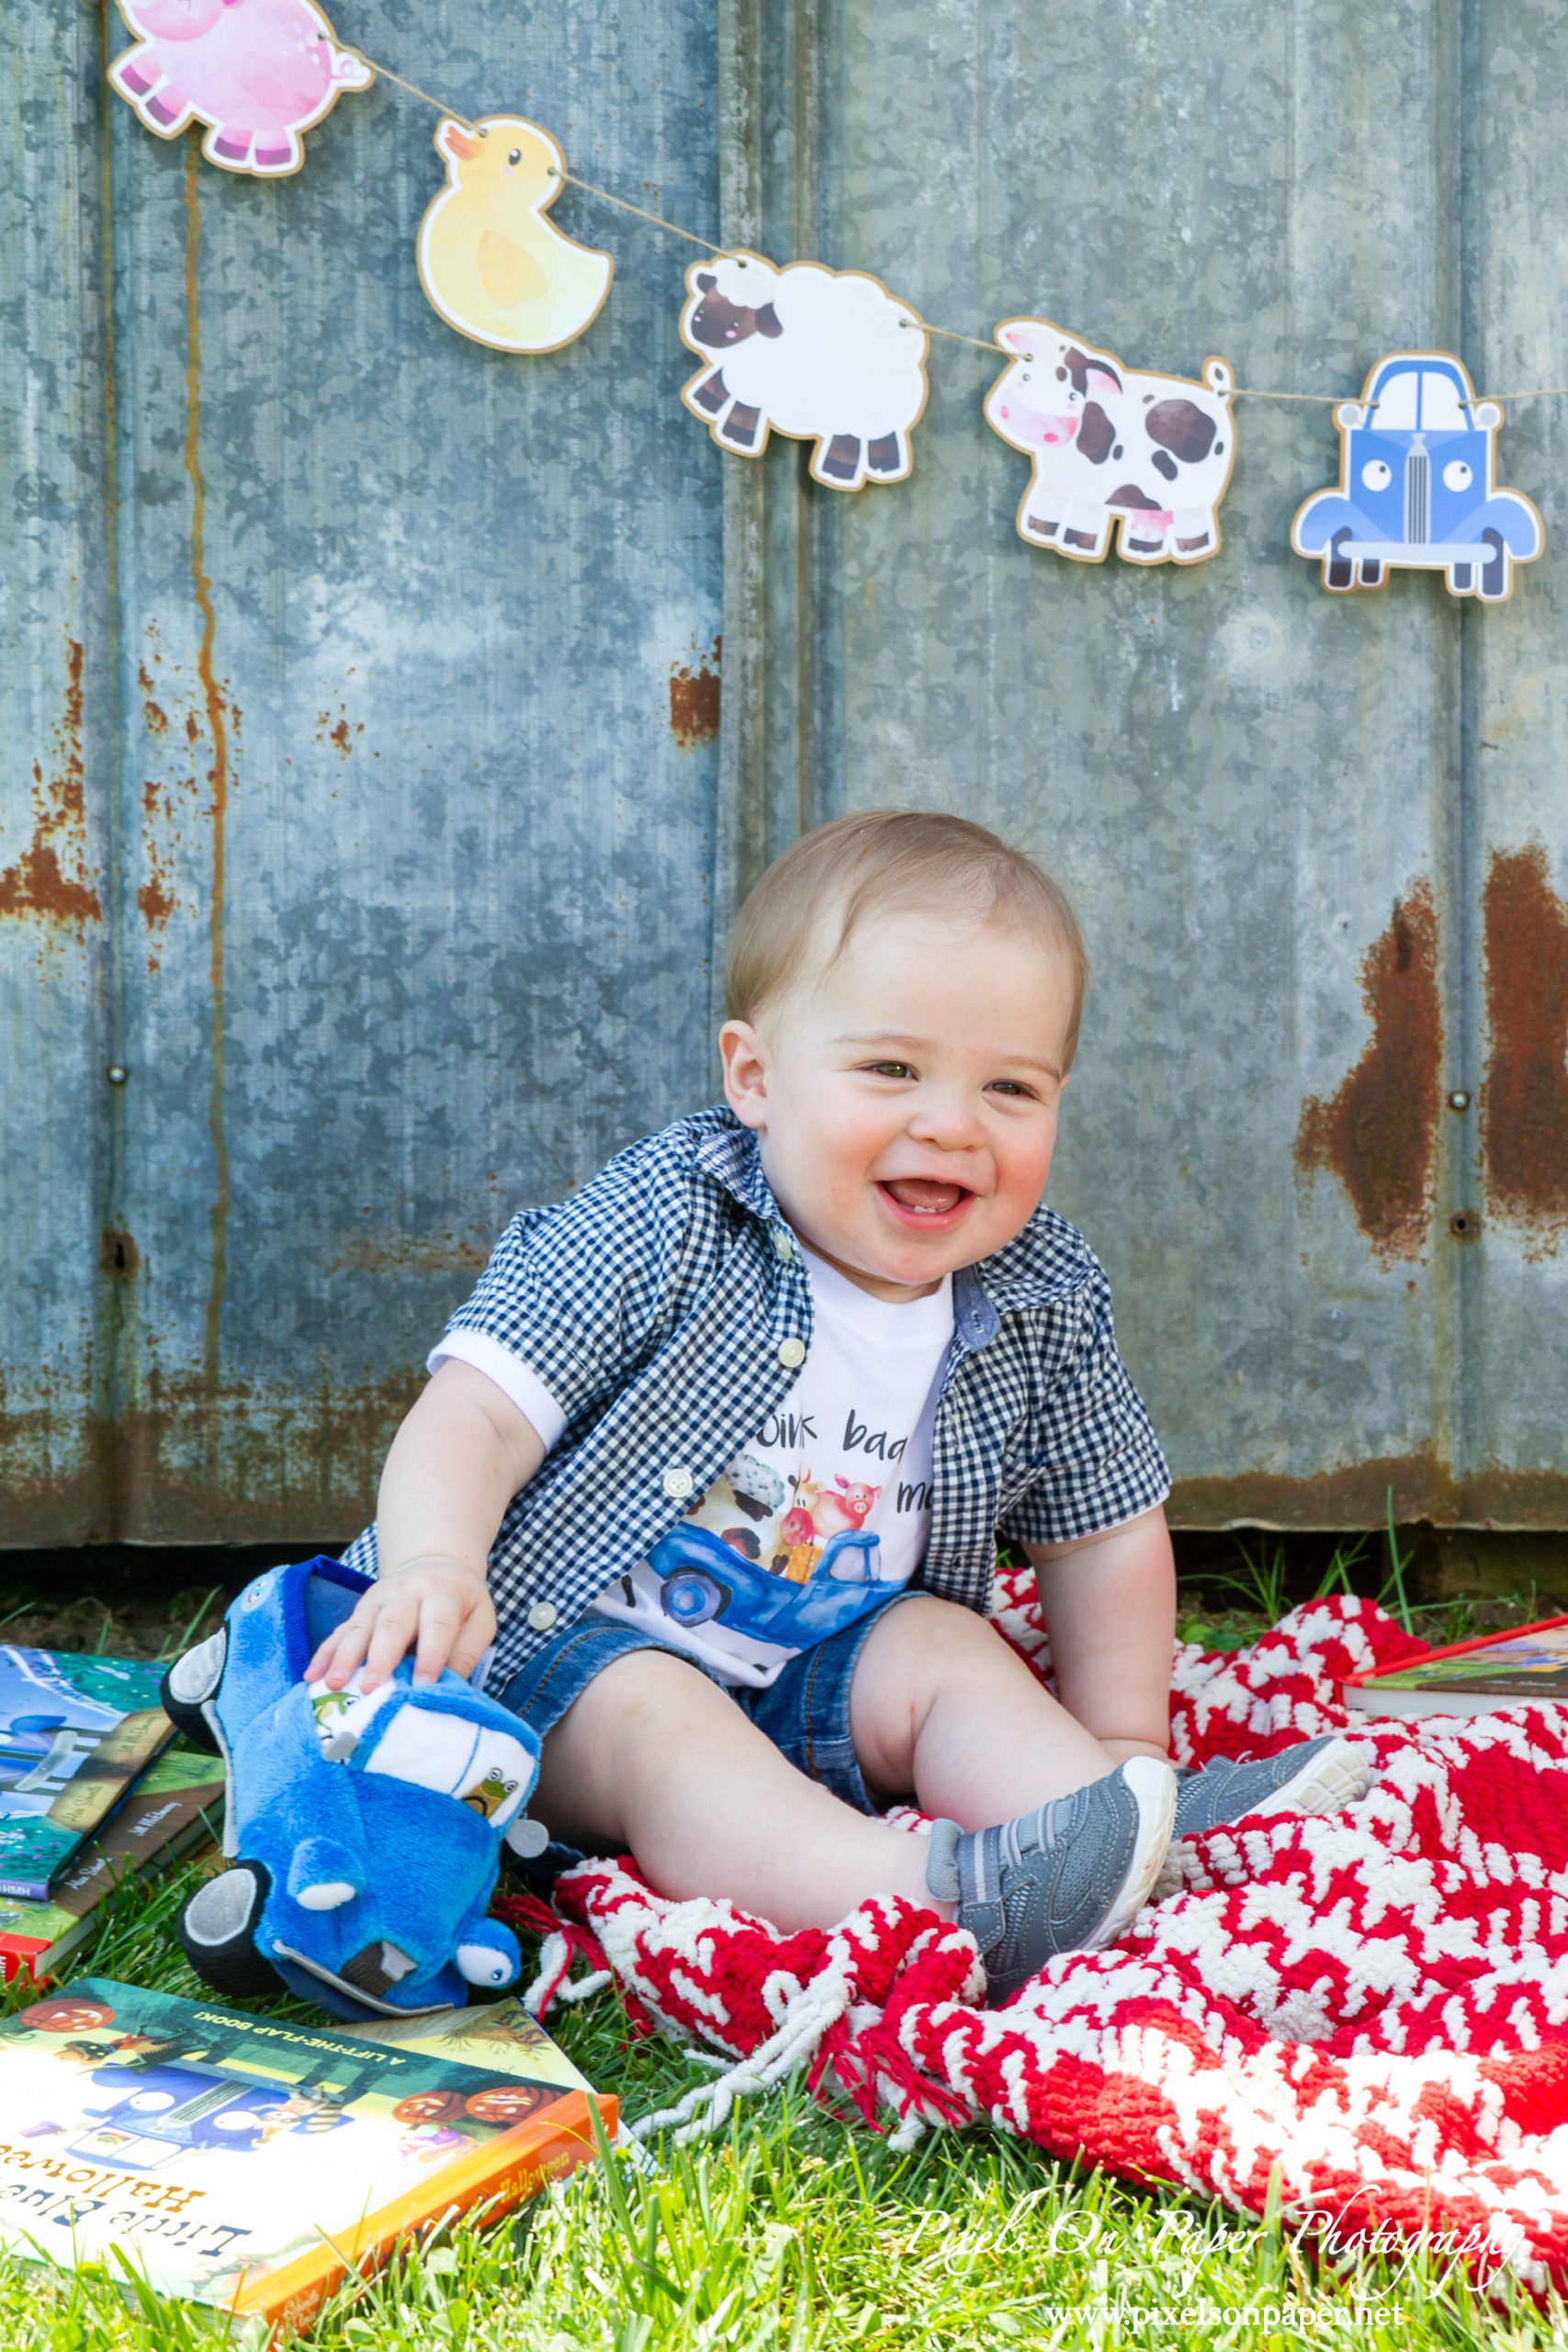 Pixels On Paper Wilkesboro NC Photographers Tibbett One Year Baby boy portrait photo